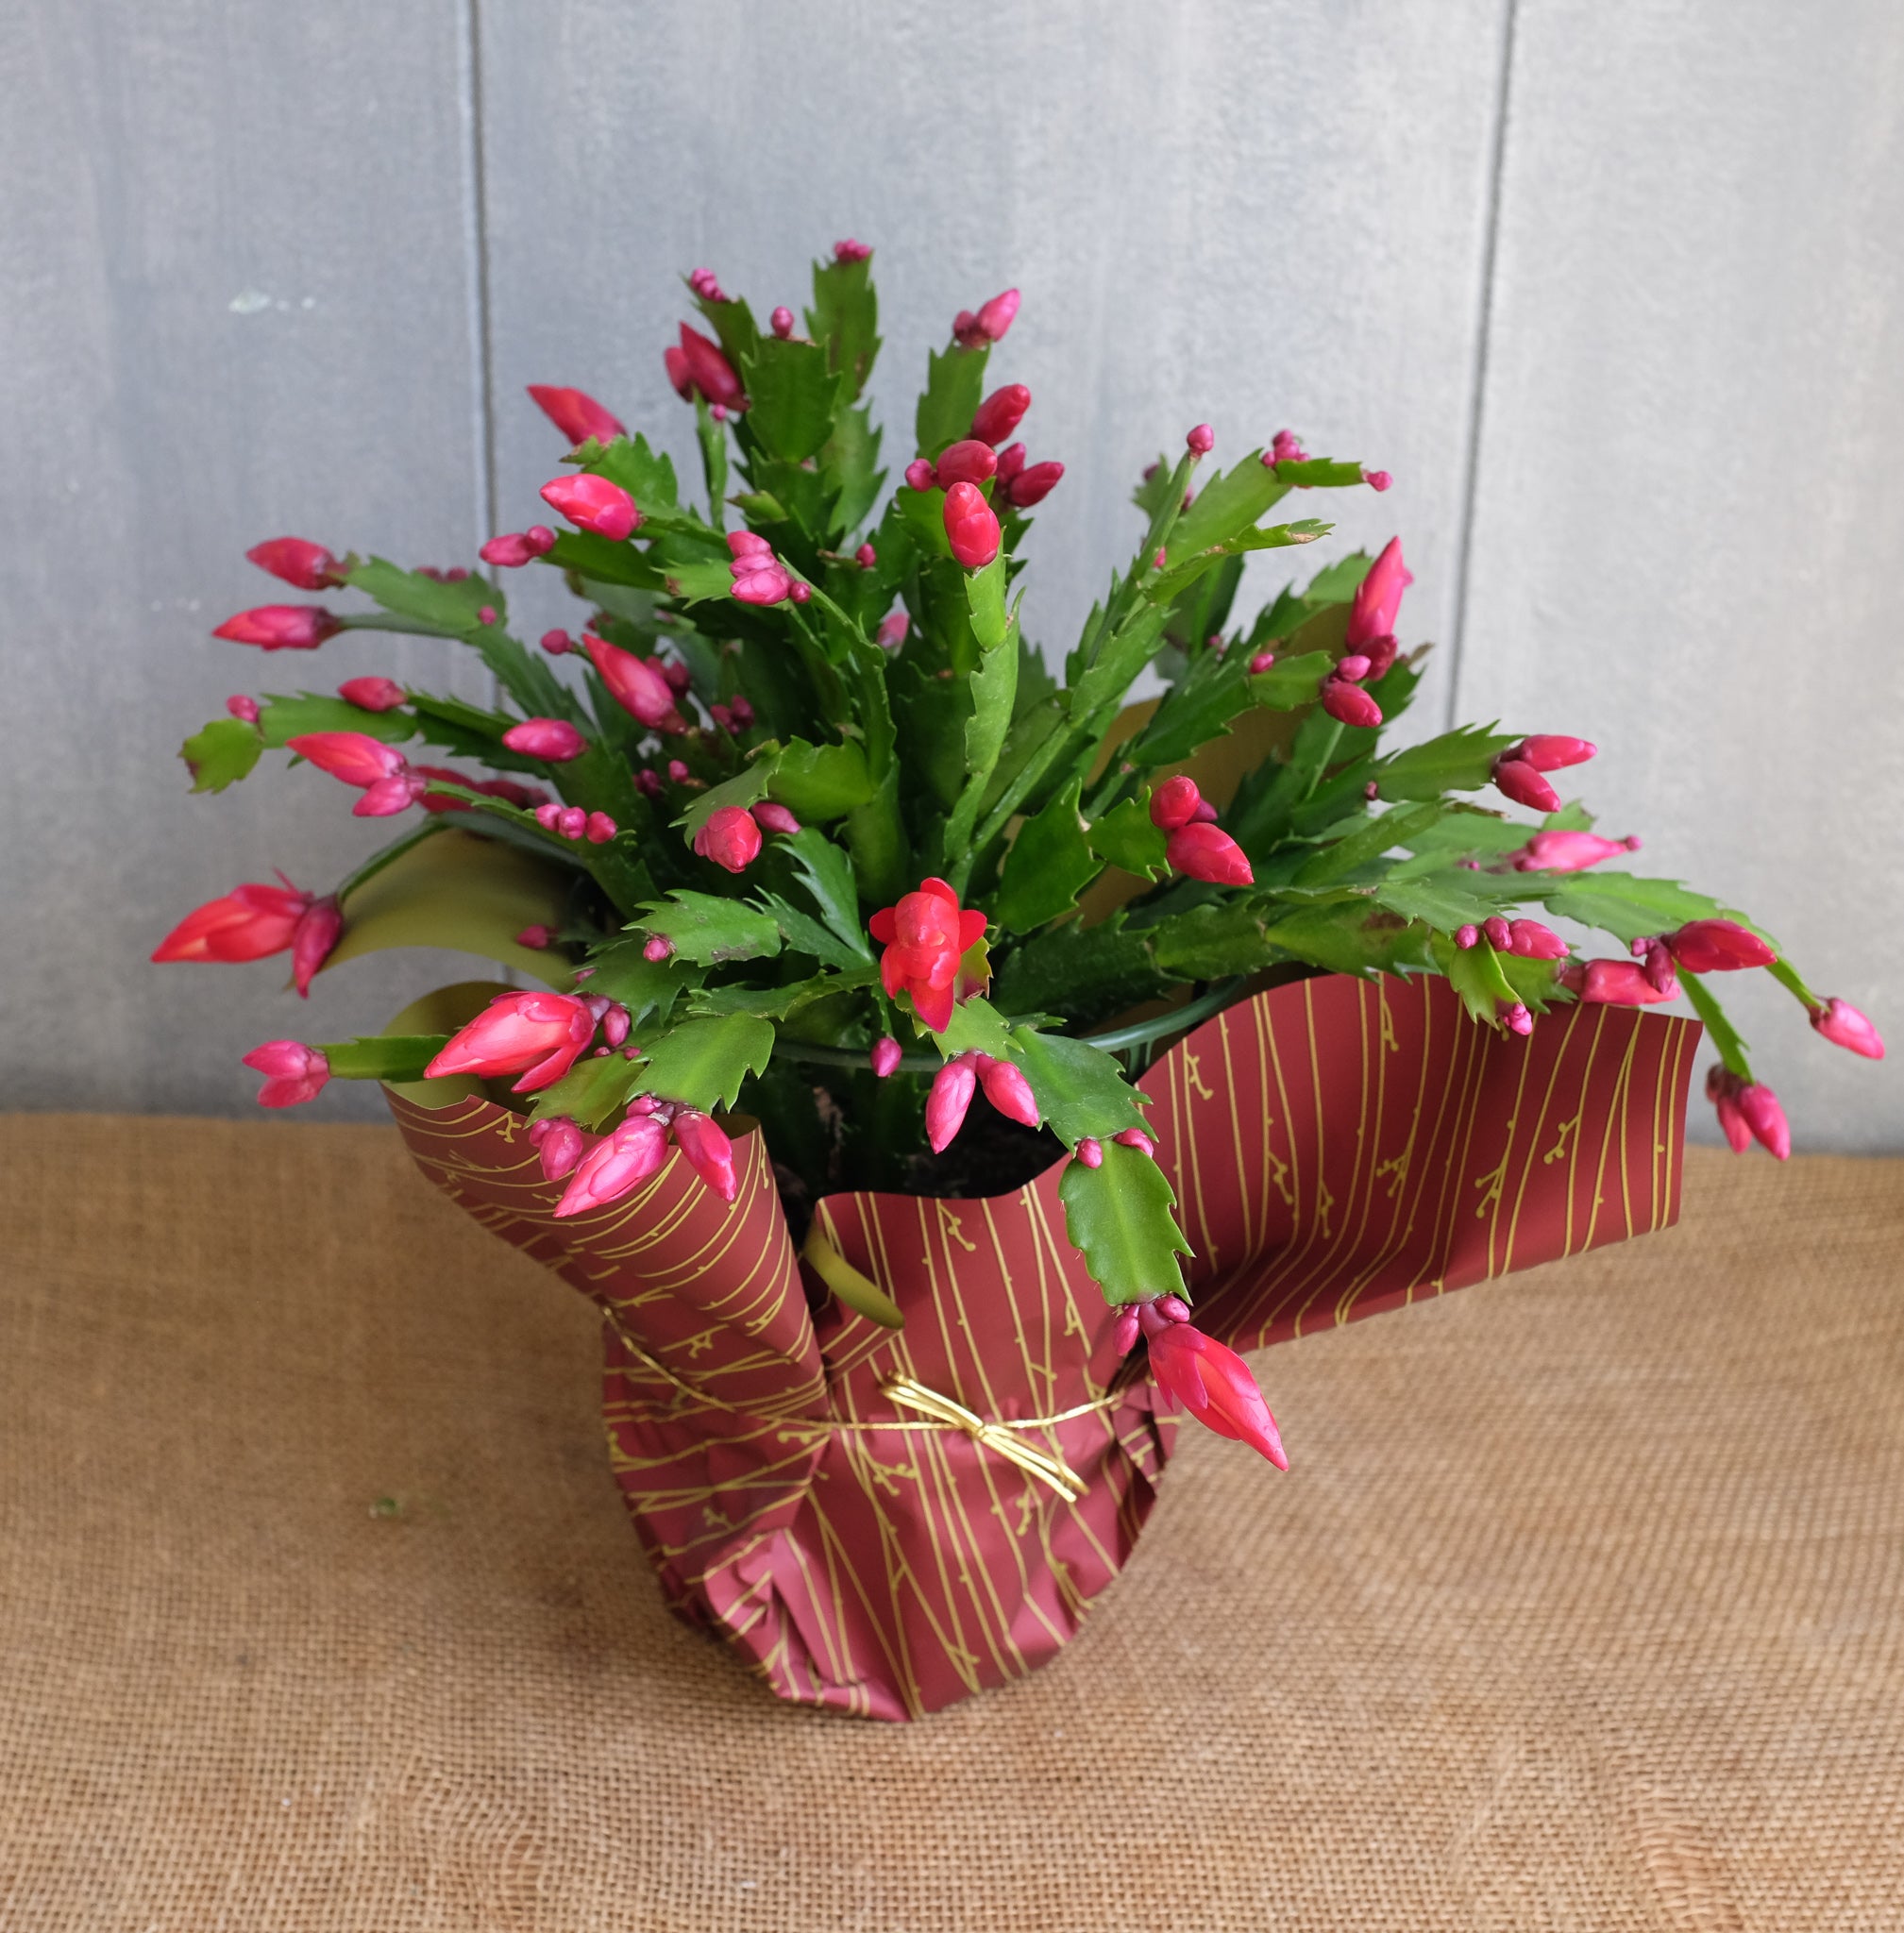 Christmas cactus of the florist's choice